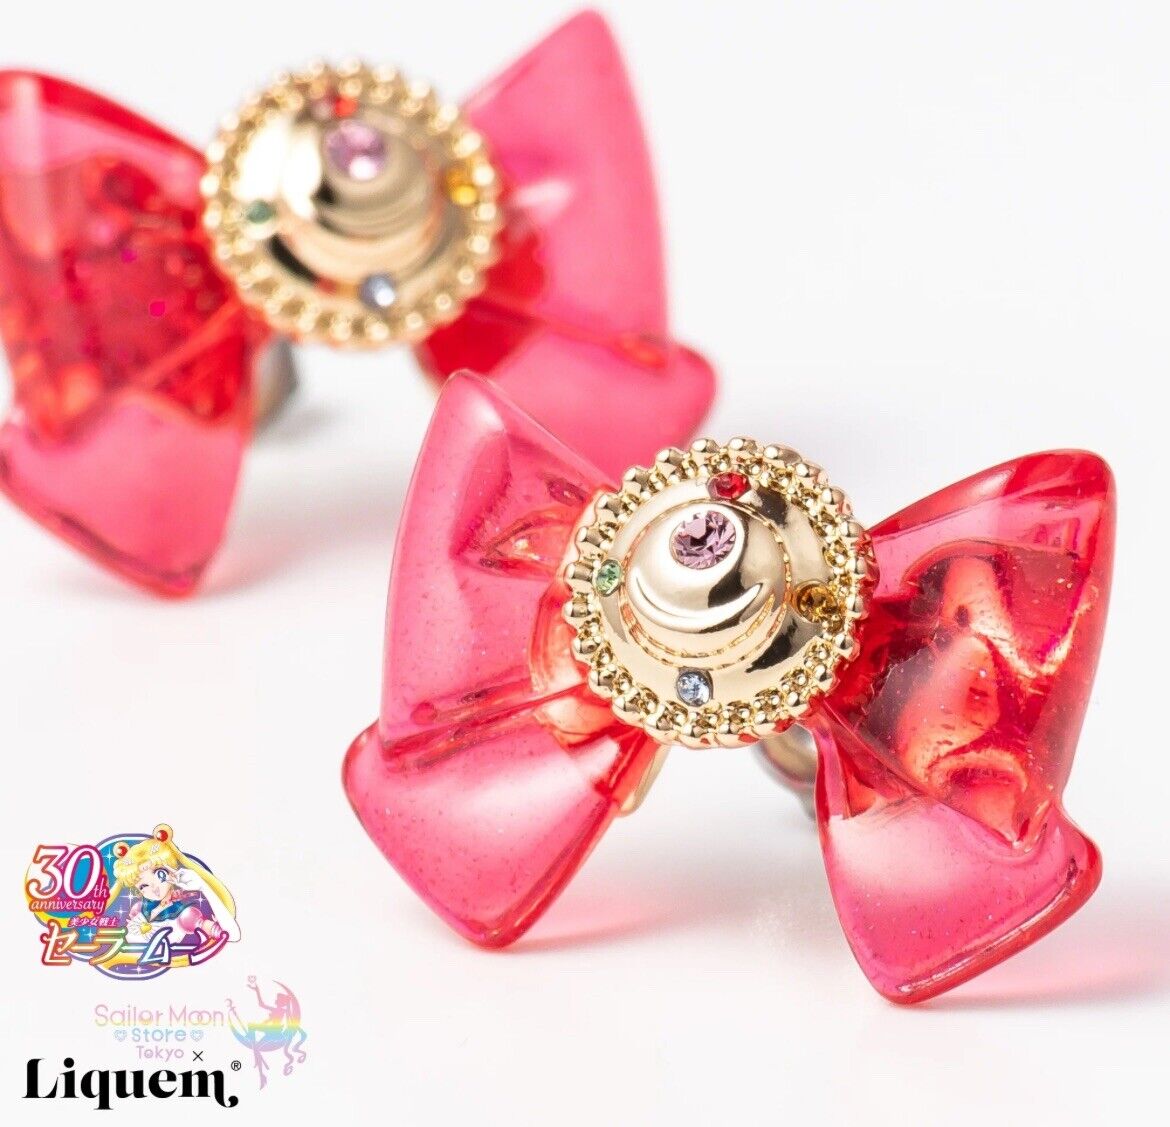 【PSL】Sailor Moon Liquem / Brooch Ribbon pierced JAPAN  accessories limited